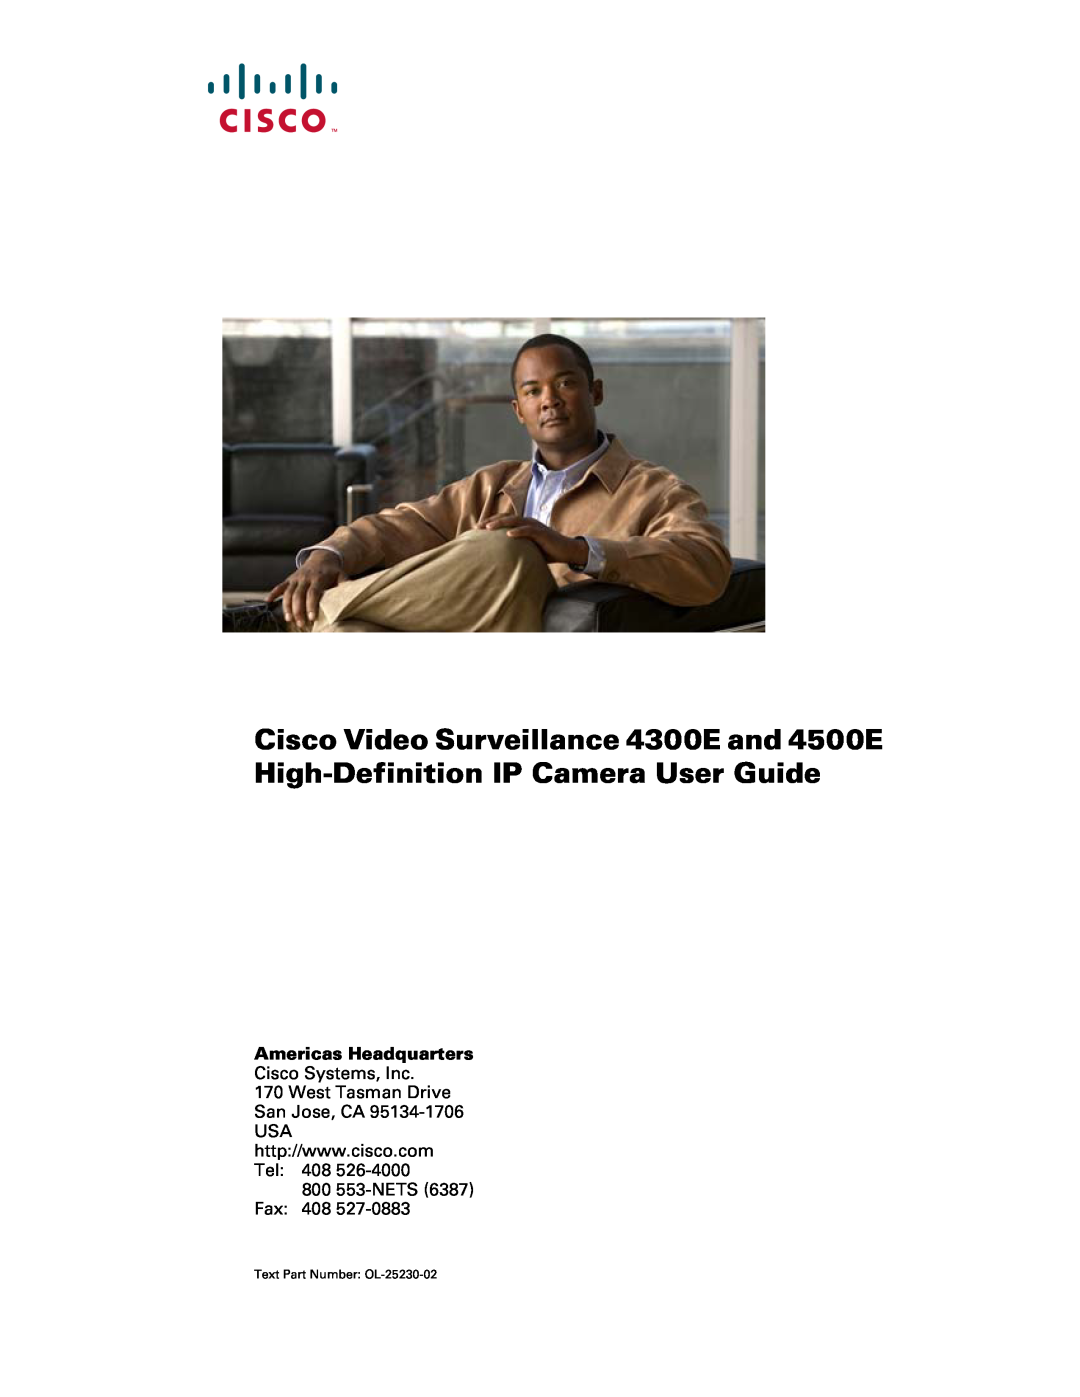 Cisco Systems 4500E, 4300E manual Cisco Systems, Inc, West Tasman Drive San Jose, CA, Fax, Text Part Number OL-25230-02 